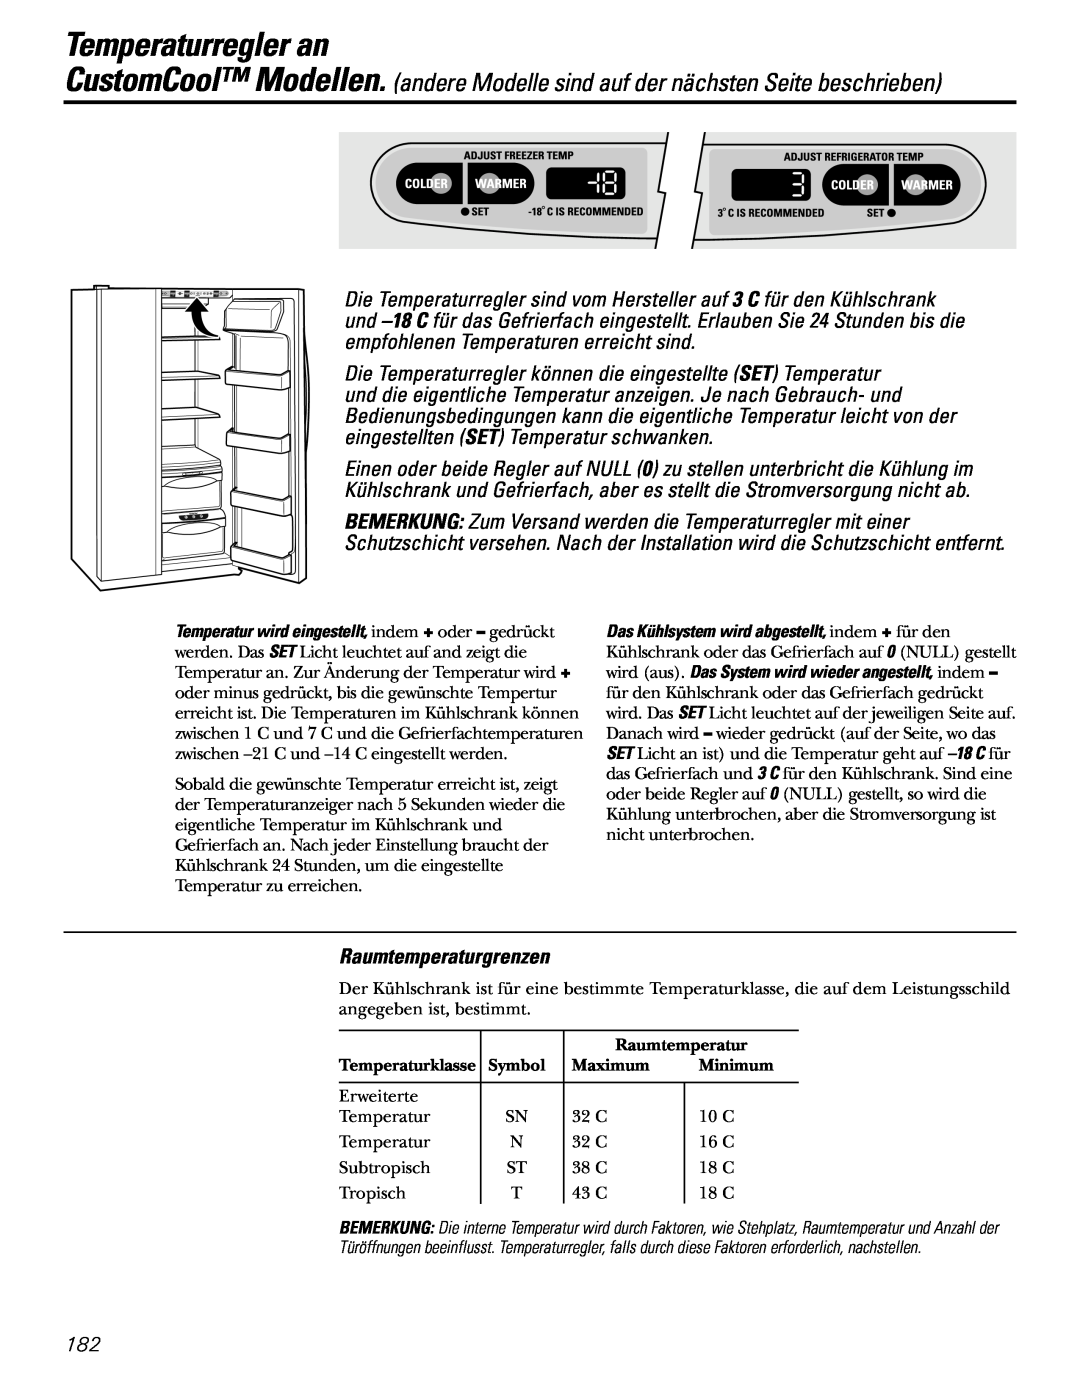 GE 21, 23, 25, 27, 29 installation instructions Temperaturregler an, Raumtemperaturgrenzen 